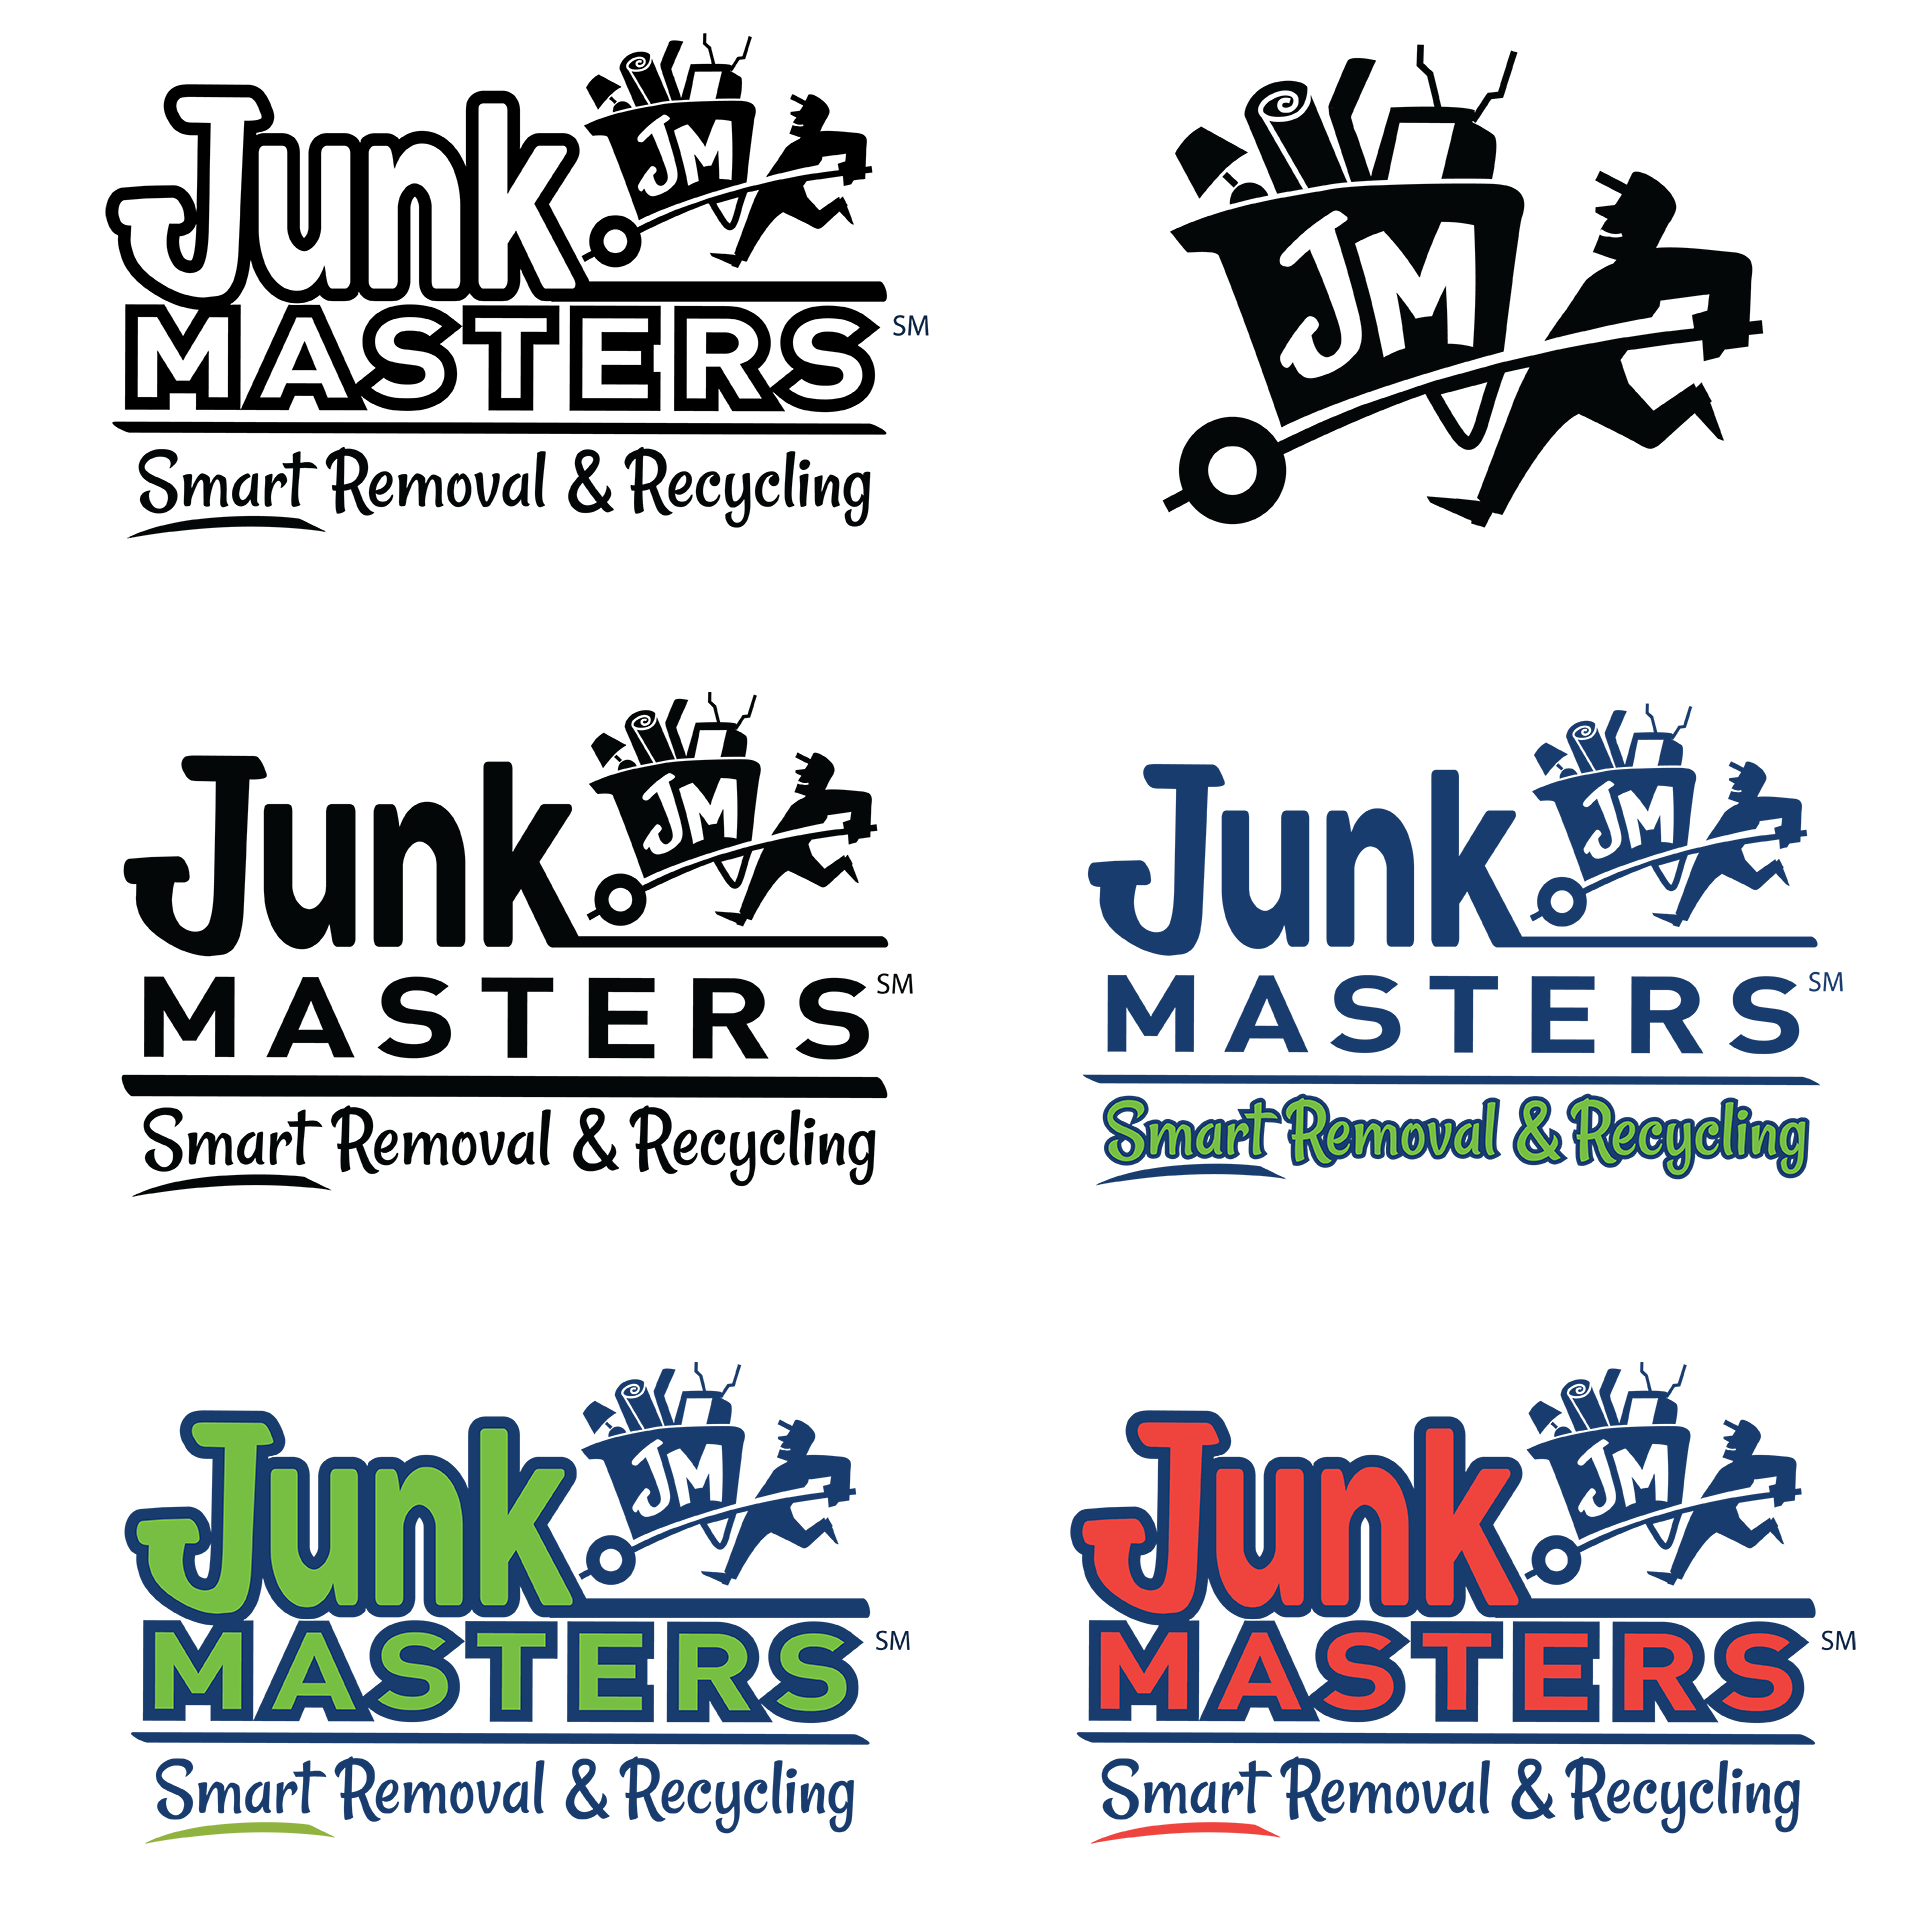 Junk Masters Logo Color Variations